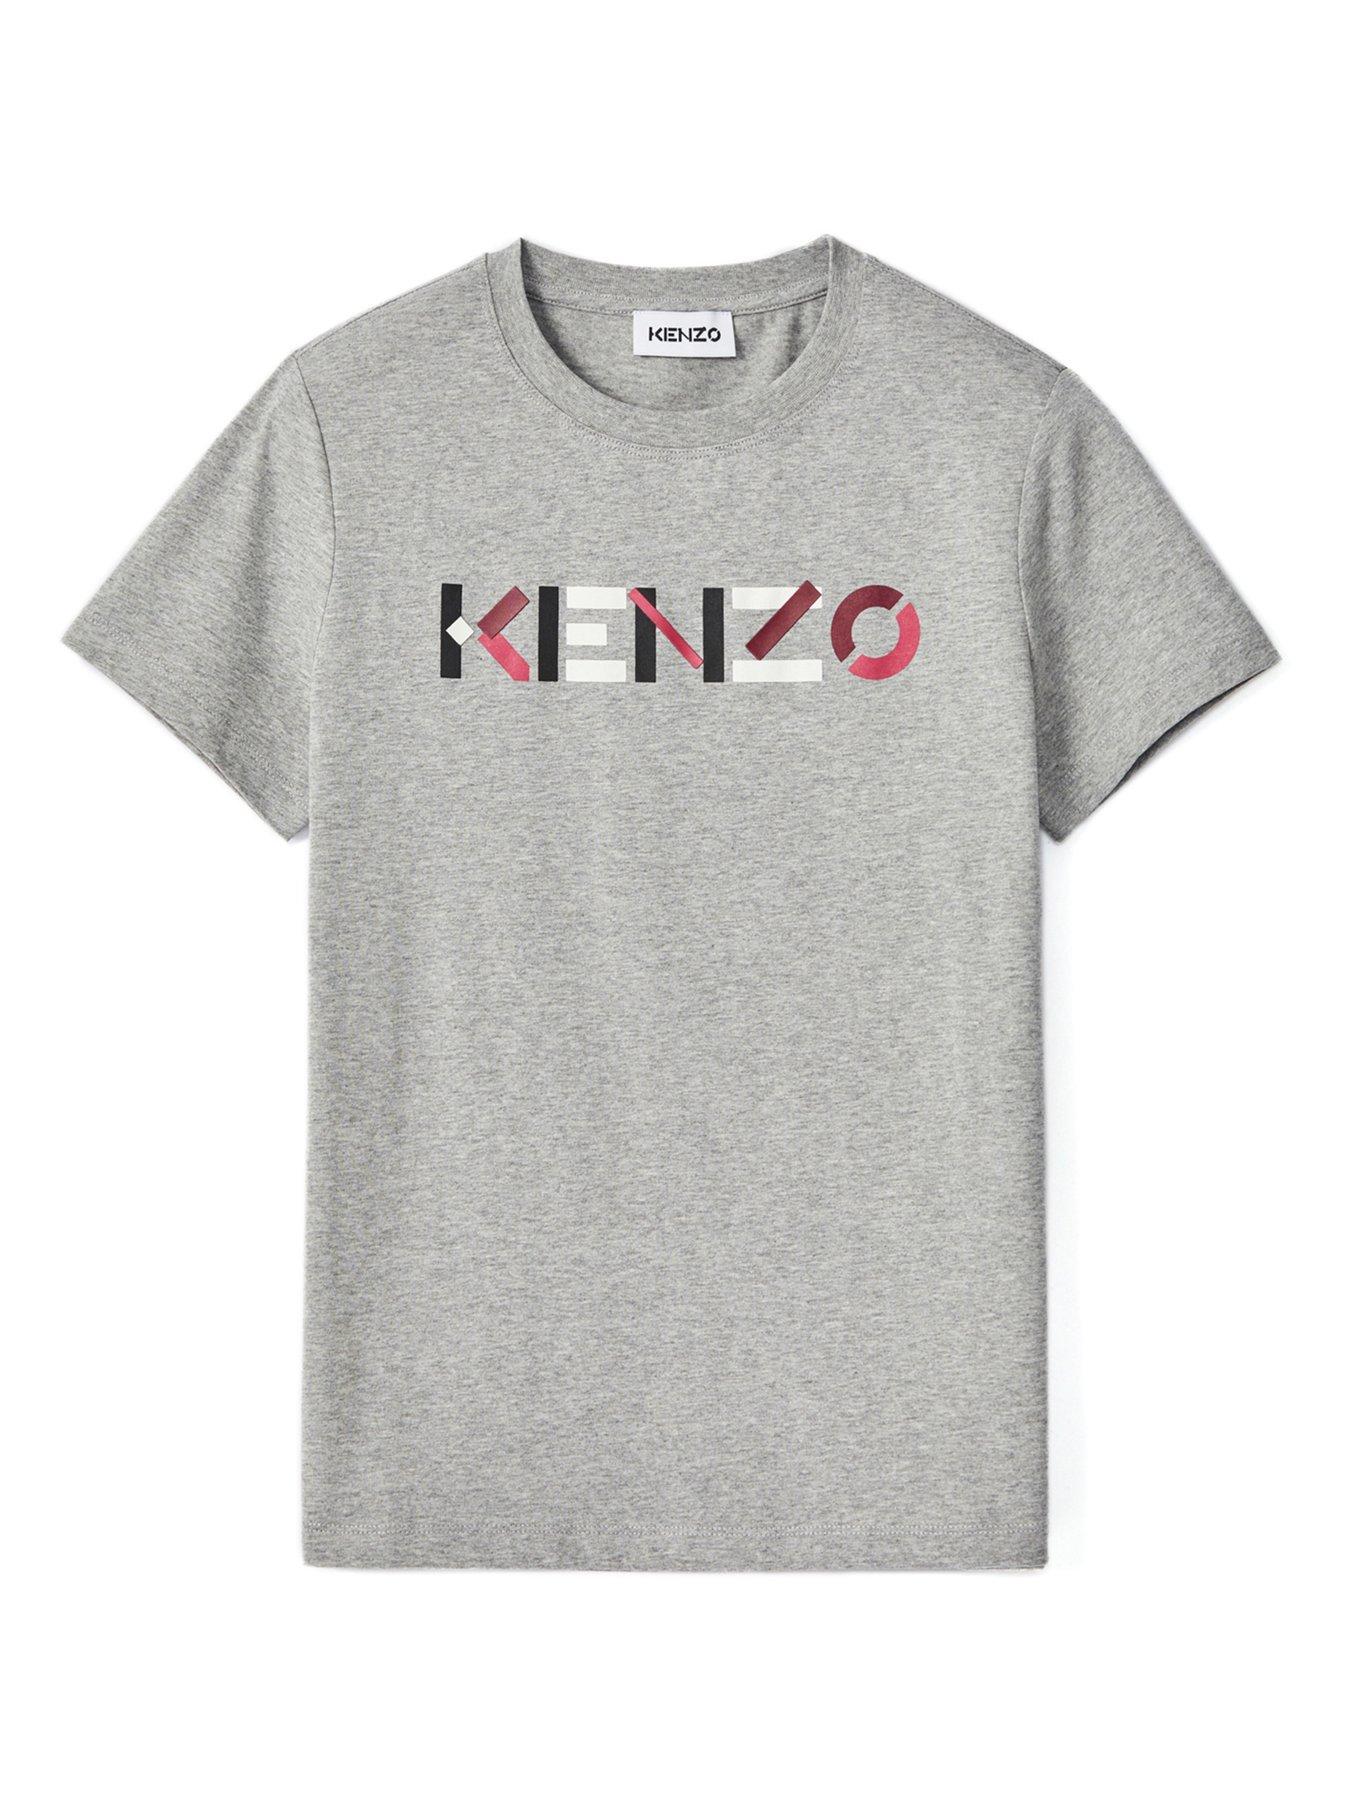 kenzo designer brands